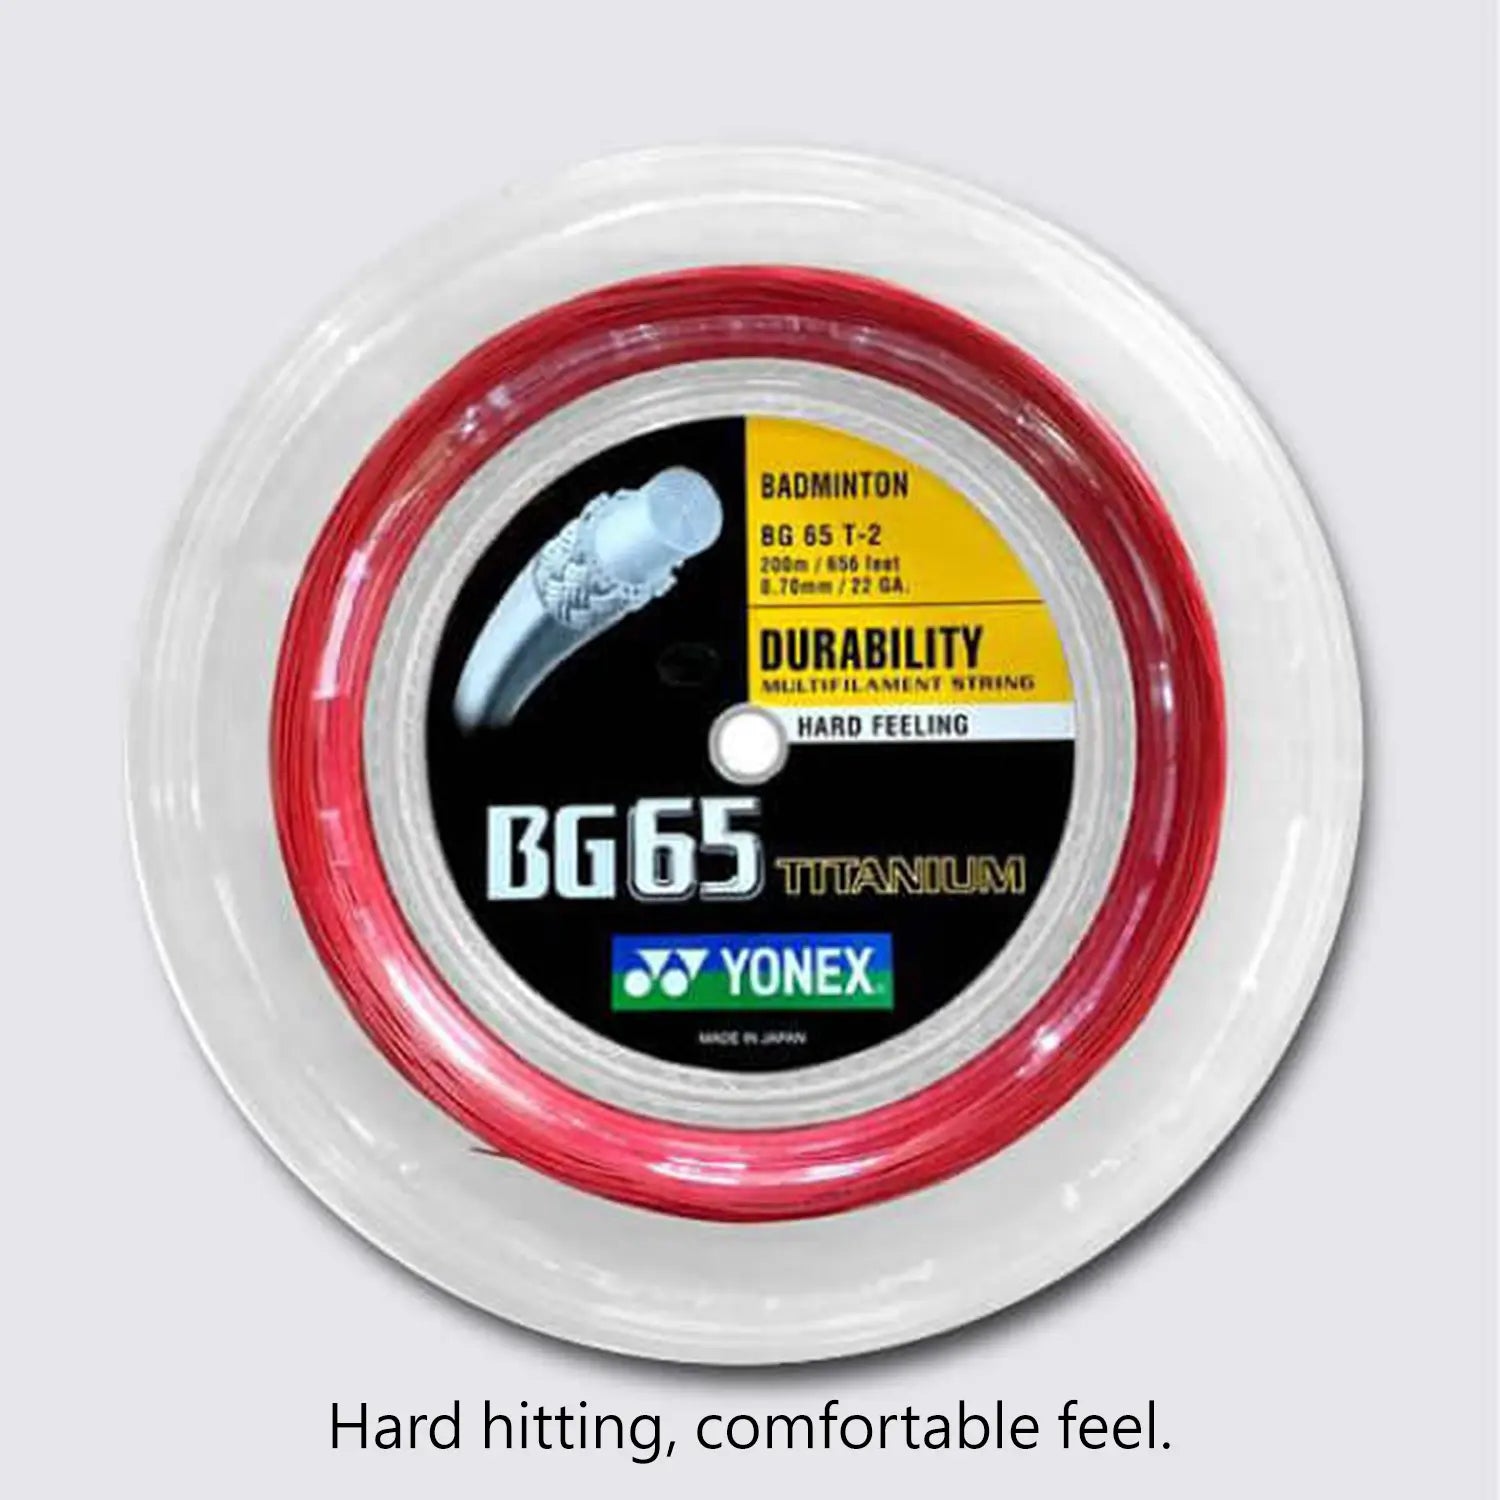 Yonex BG 65 Ti 200m Badminton String (Red) 